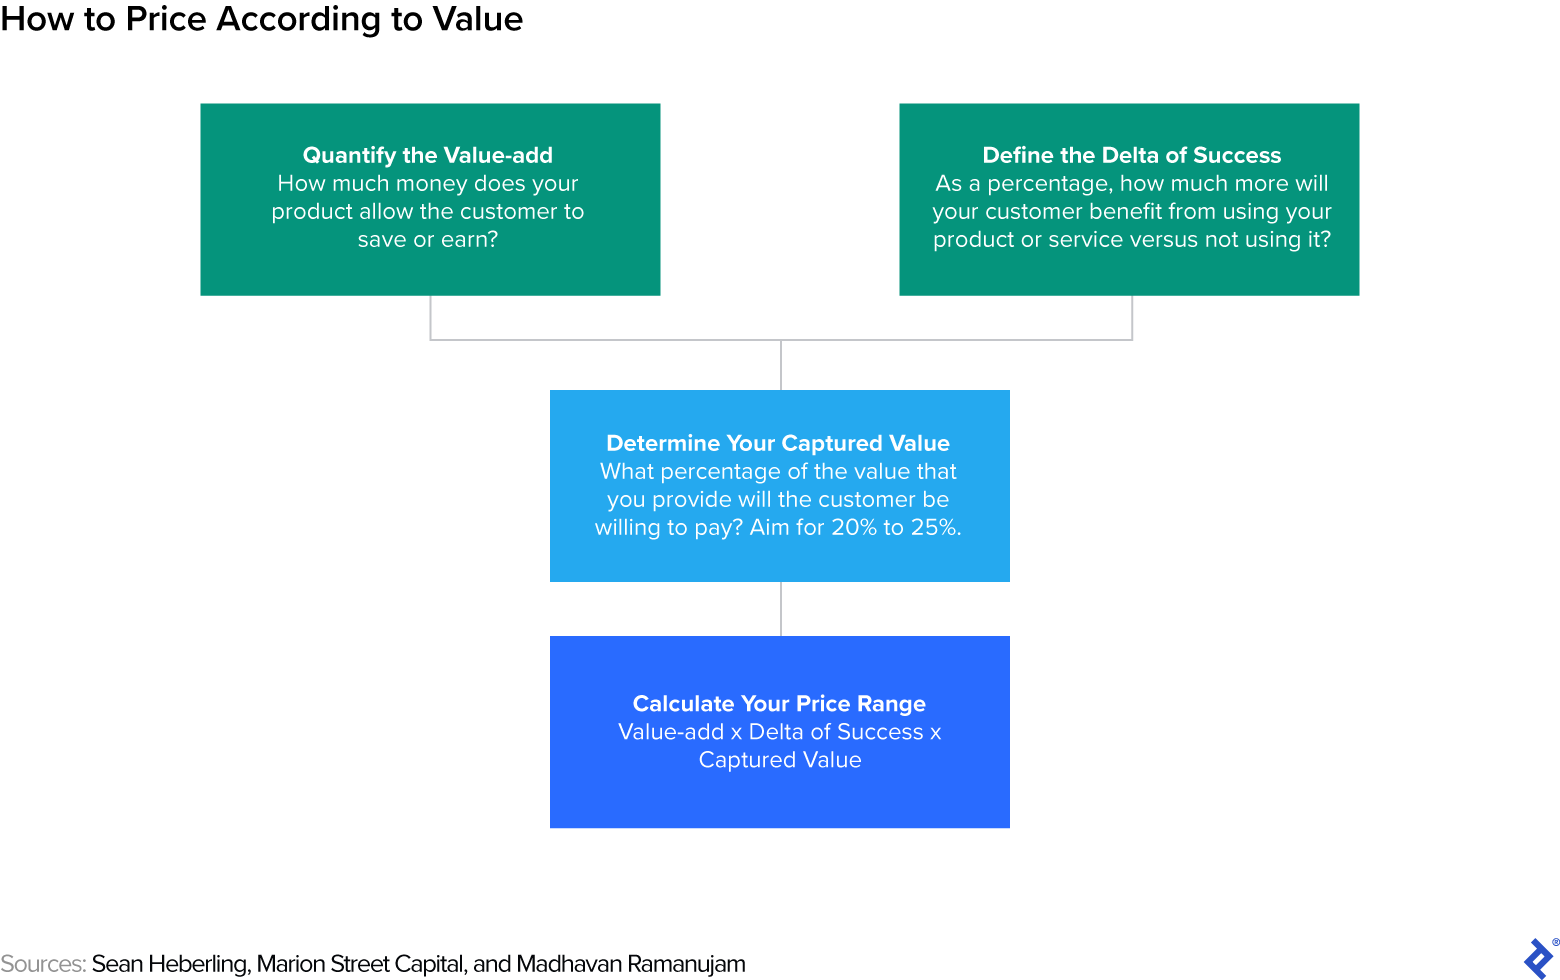 A quantitative forecasting flowchart illustrating the authorâs pricing framework described immediately before this image. The headline is: How to Price According to Value.